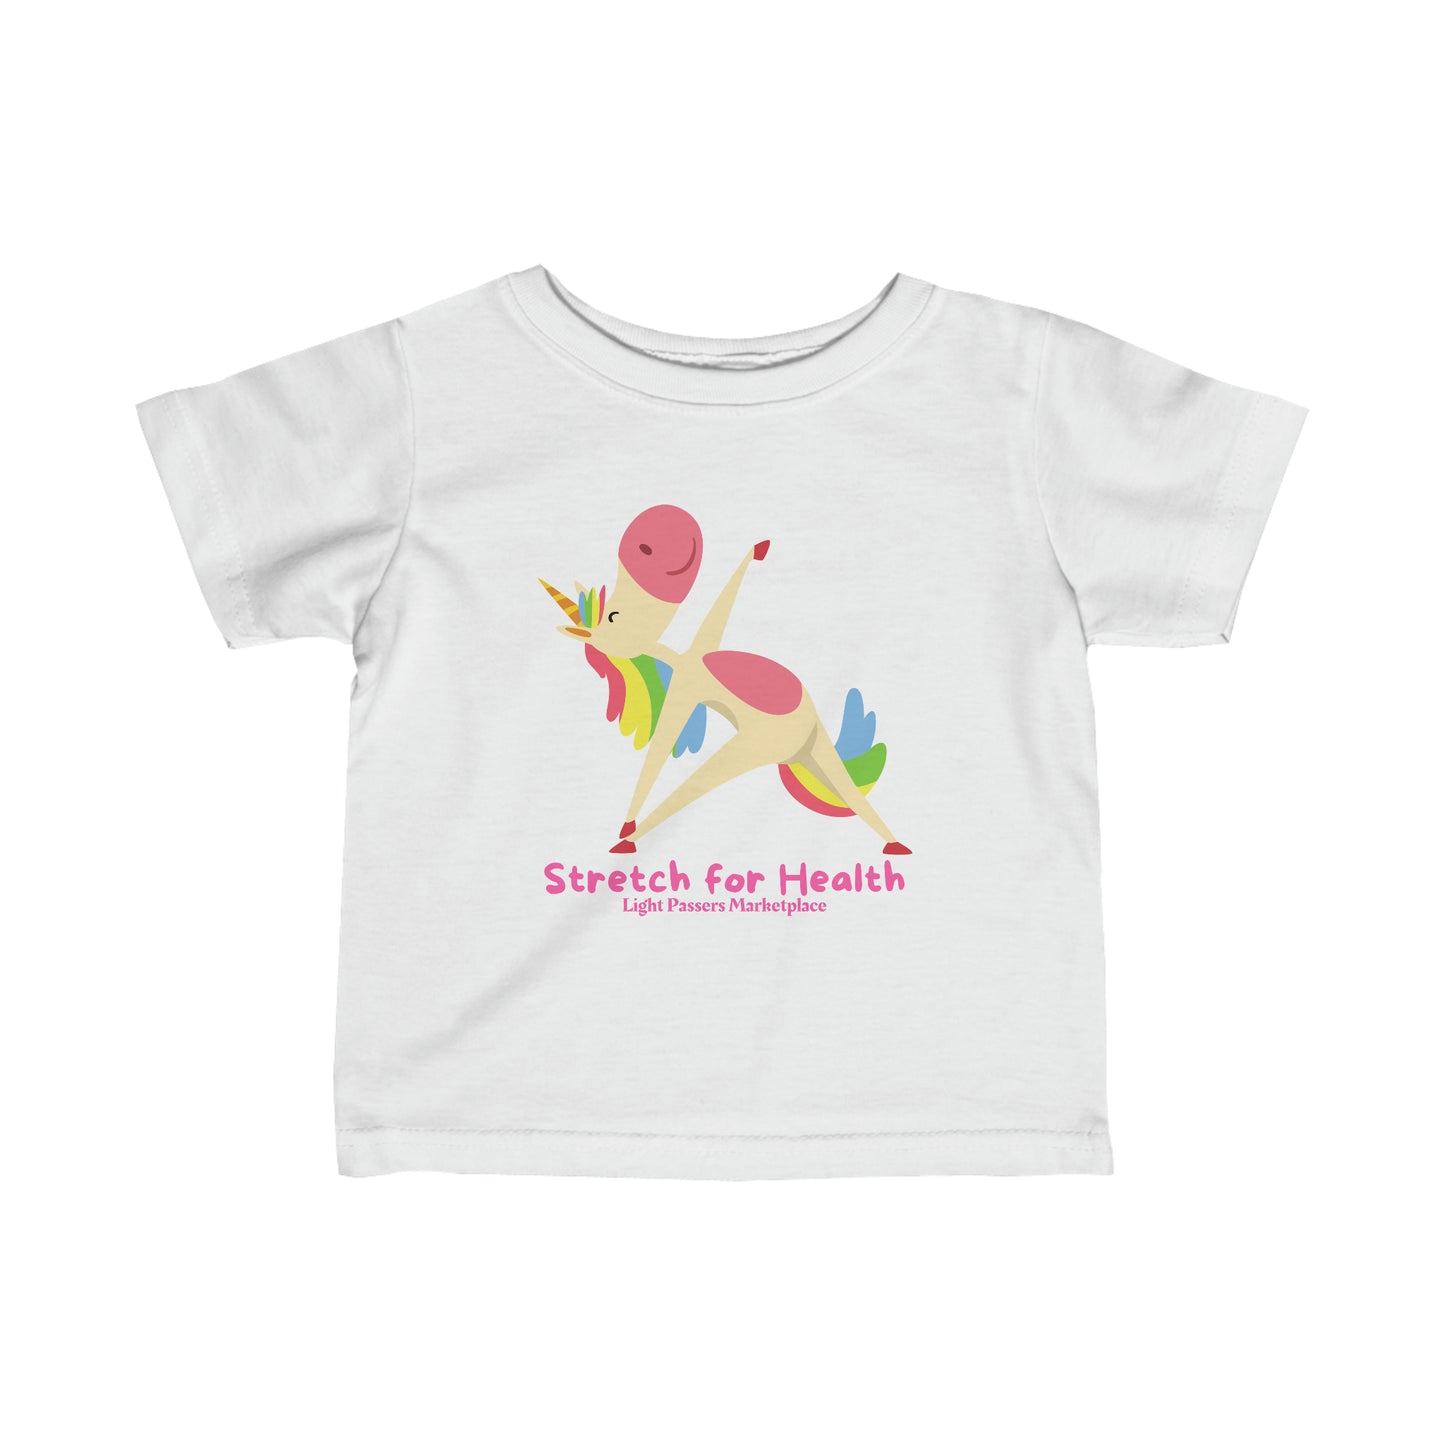 Light Passers Marketplace Unicorn Stretching Baby T-shirt Fitness, Mental Health